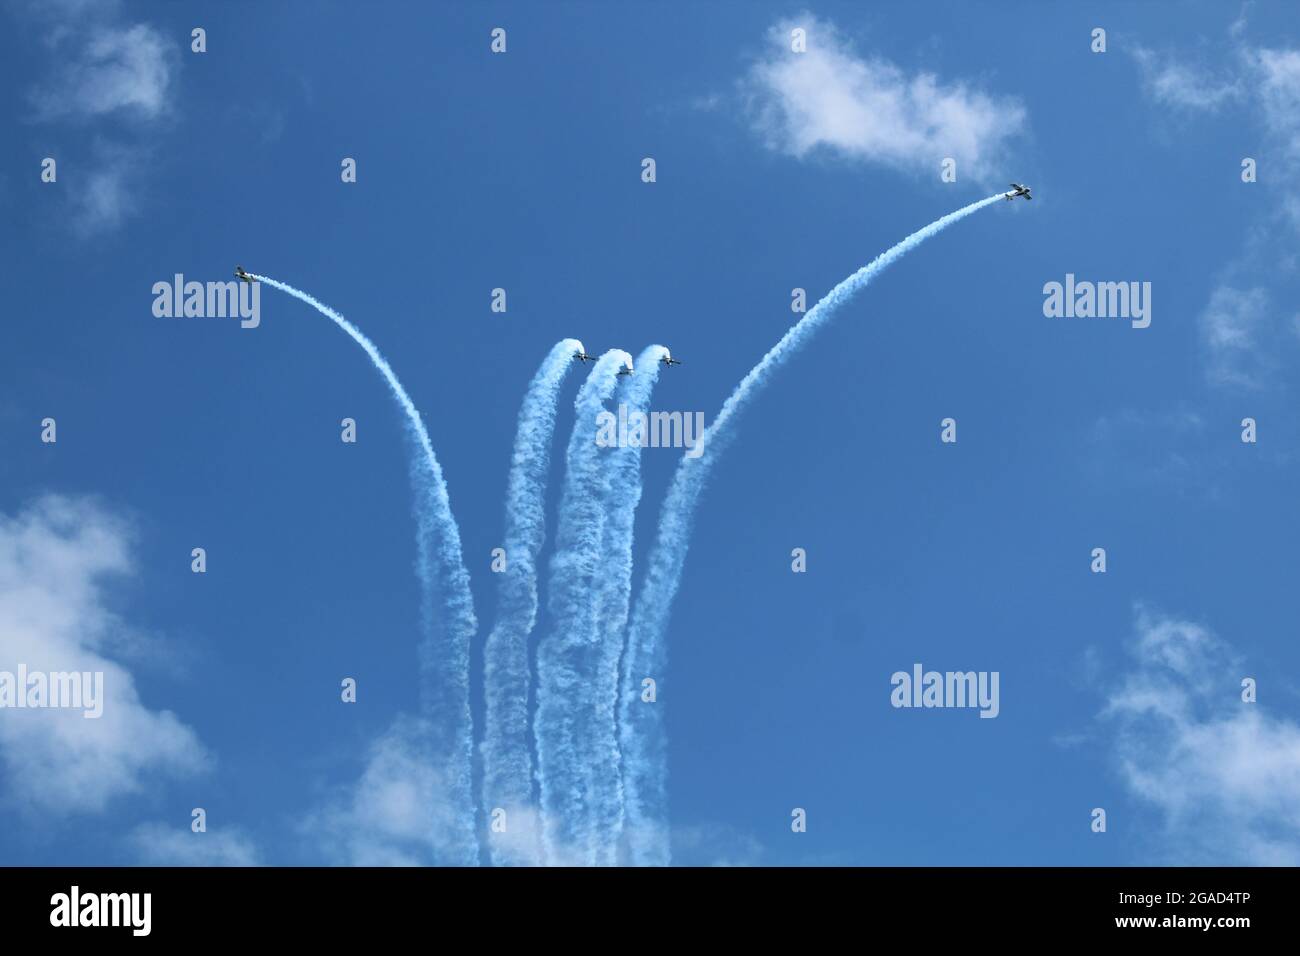 Acrobatic aricraft flying high speed maneuvers Stock Photo